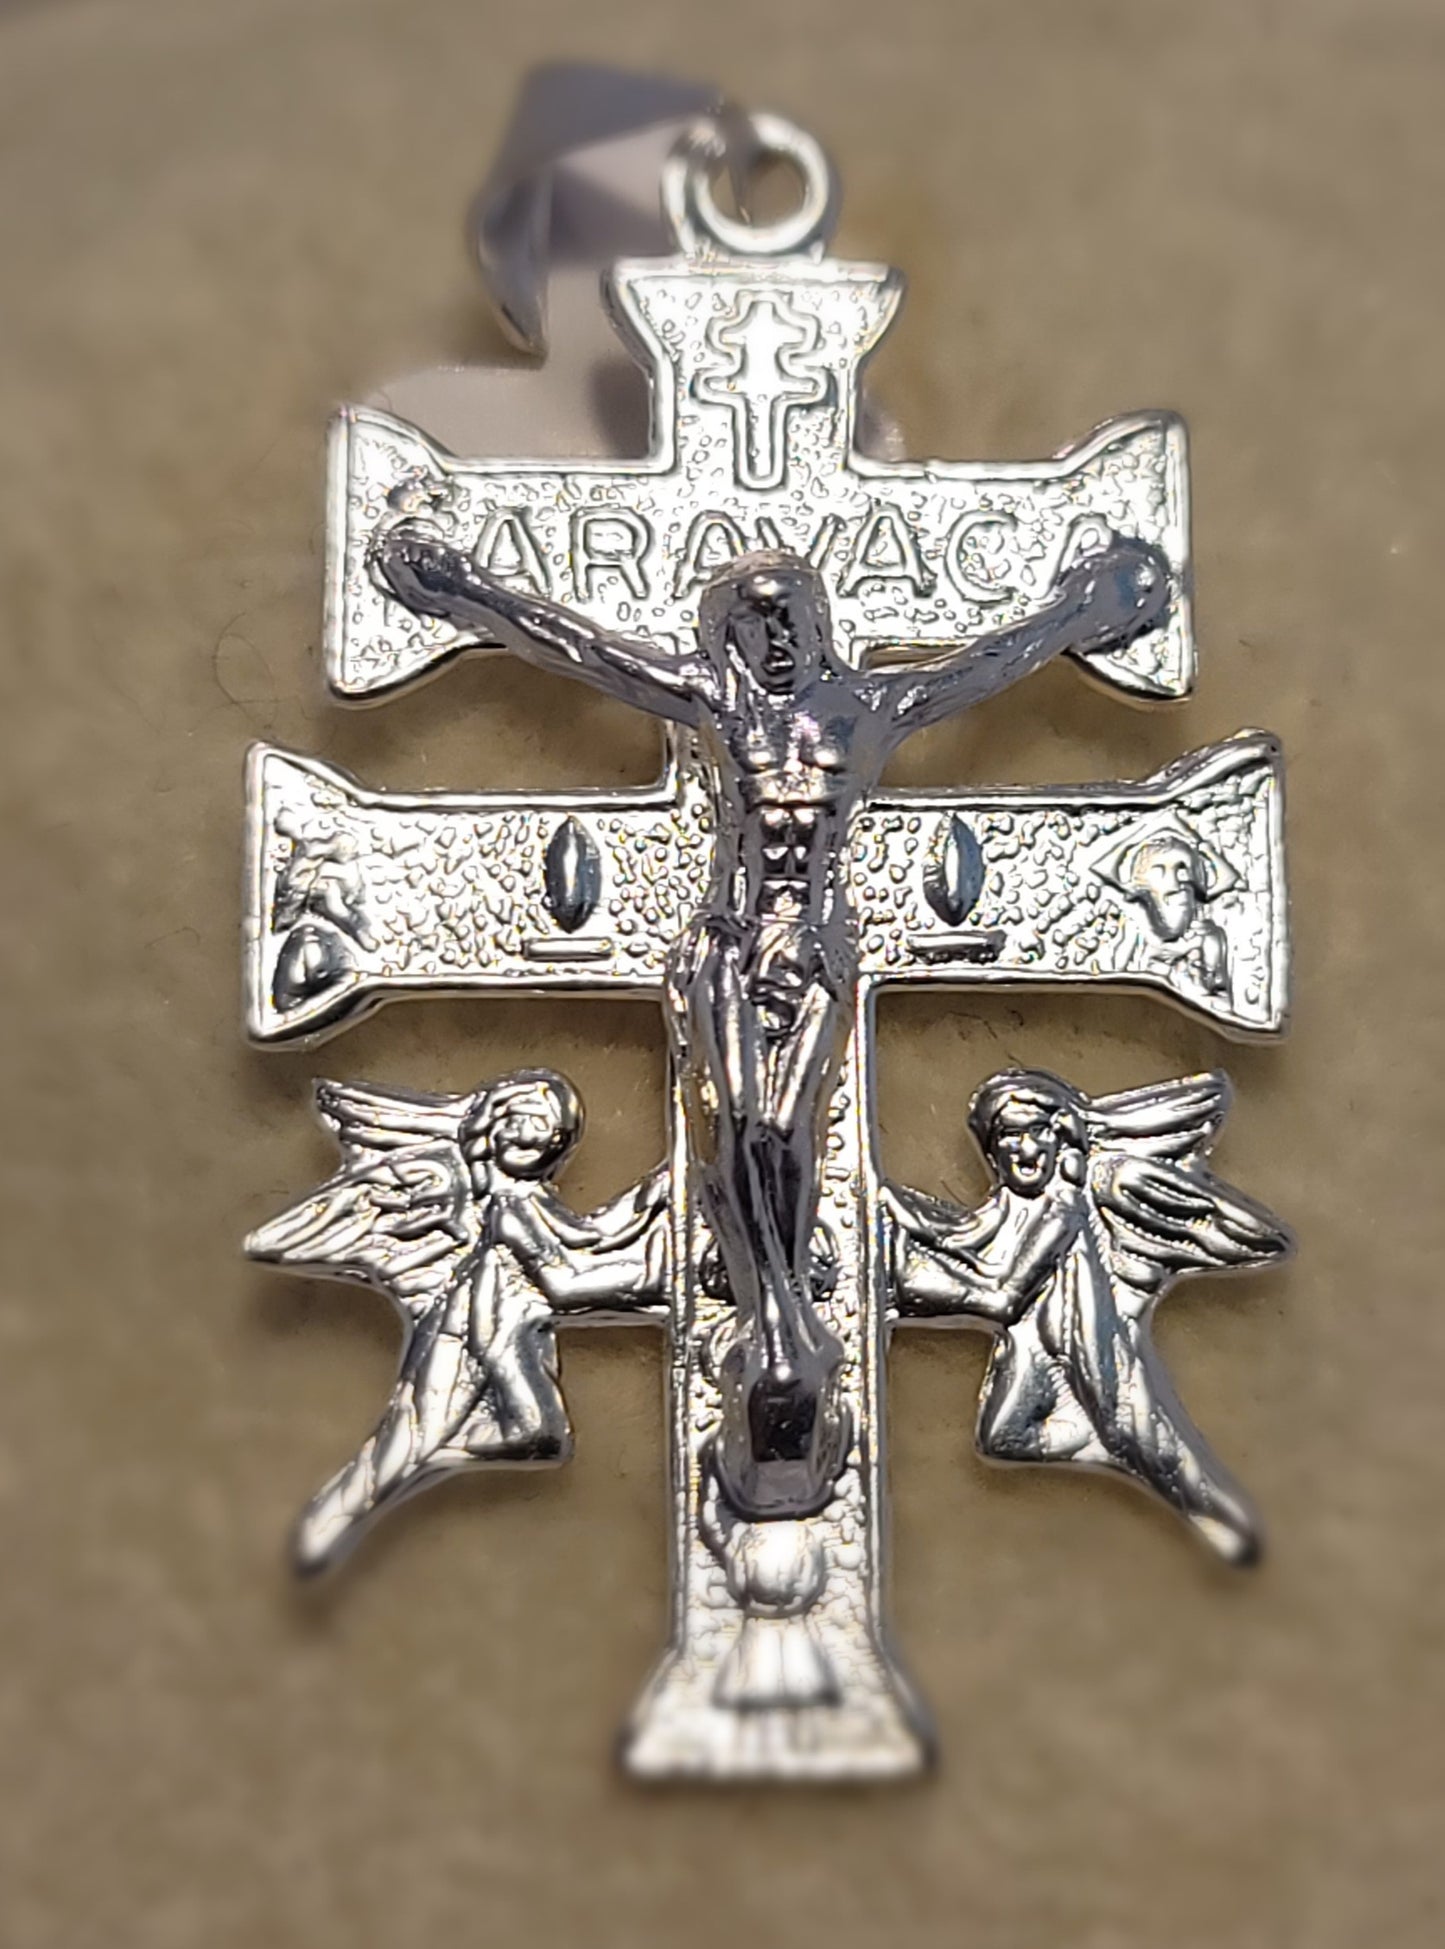 Caravaca Jesus Crucifix